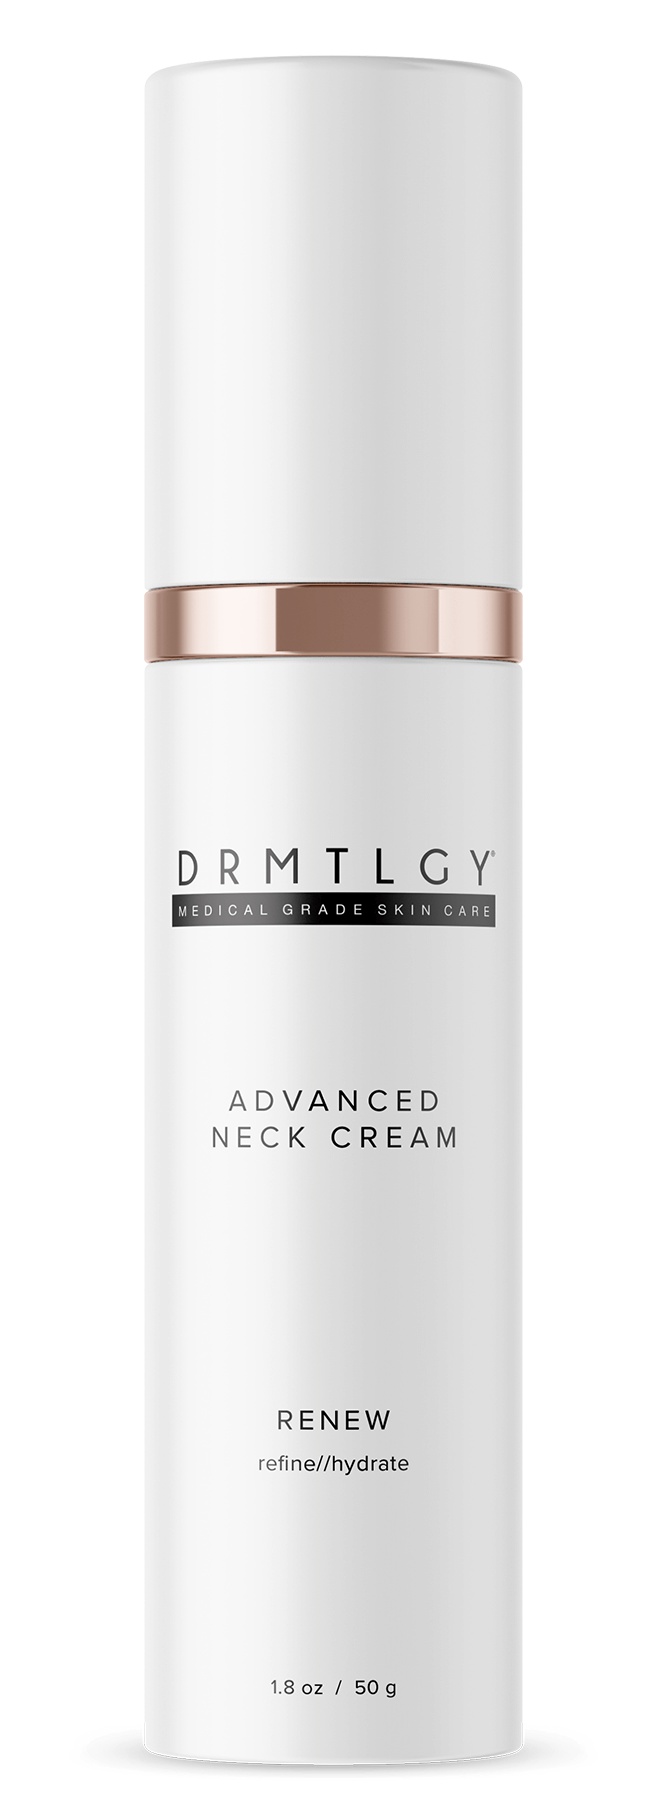 DRMTLGY Advanced Neck Cream